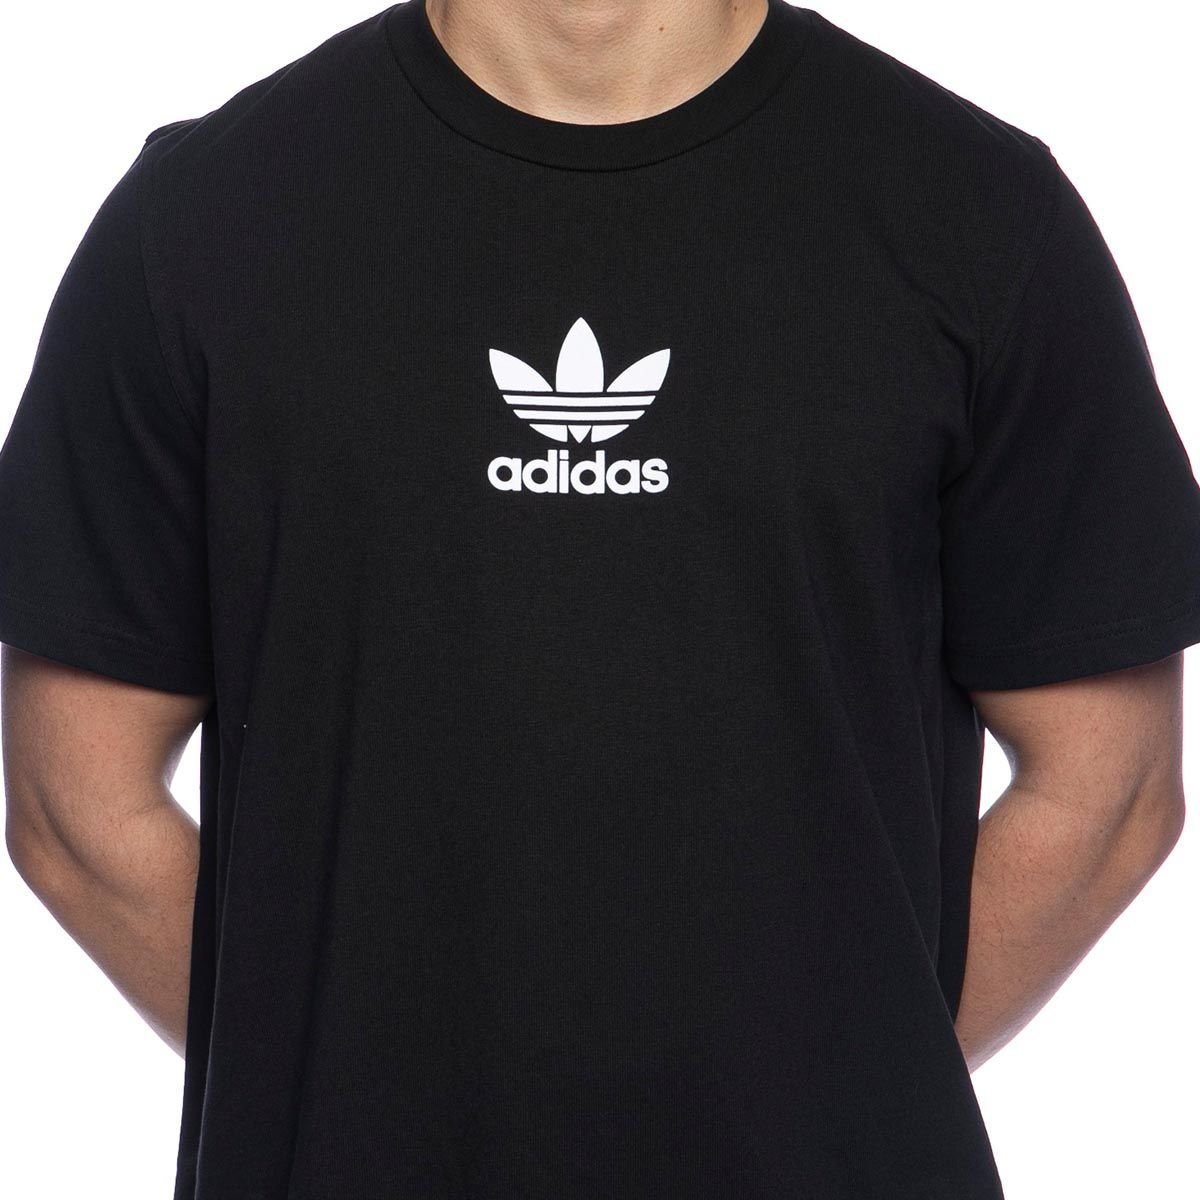 T-shirt Adidas Originals ADICLR Premium Tee black | Bludshop.com